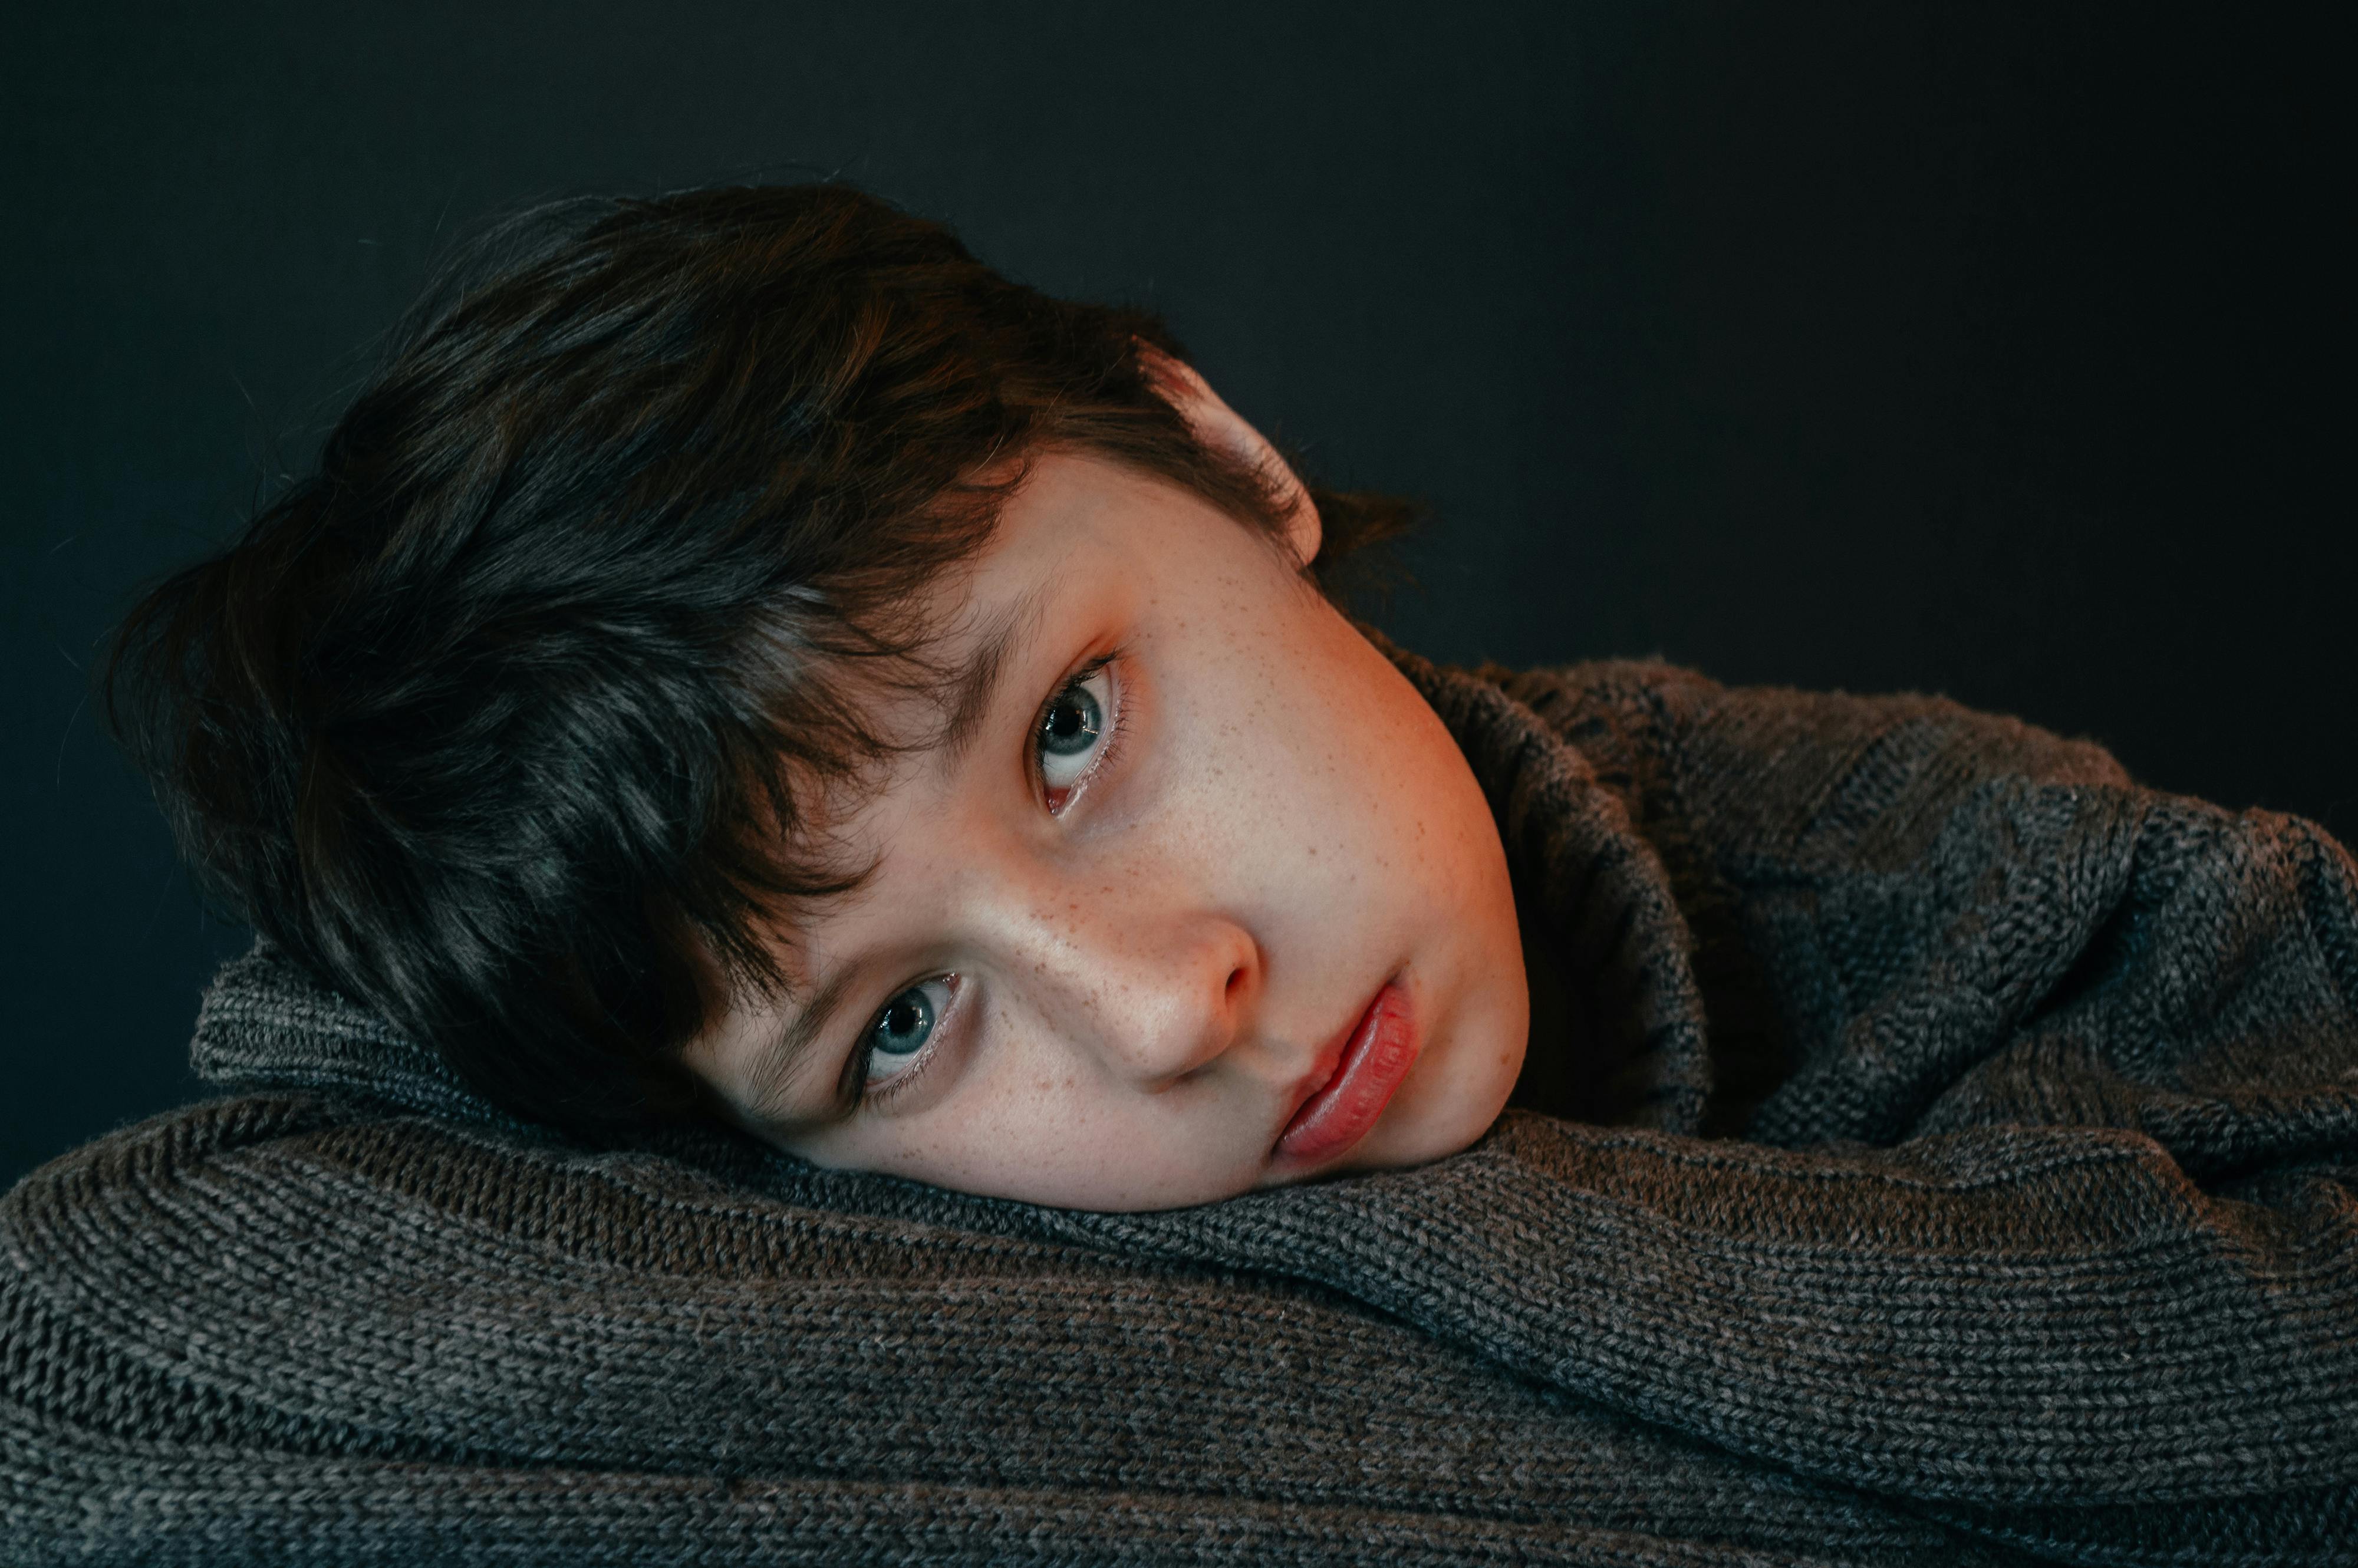 boy with head leaning on gray knitwear